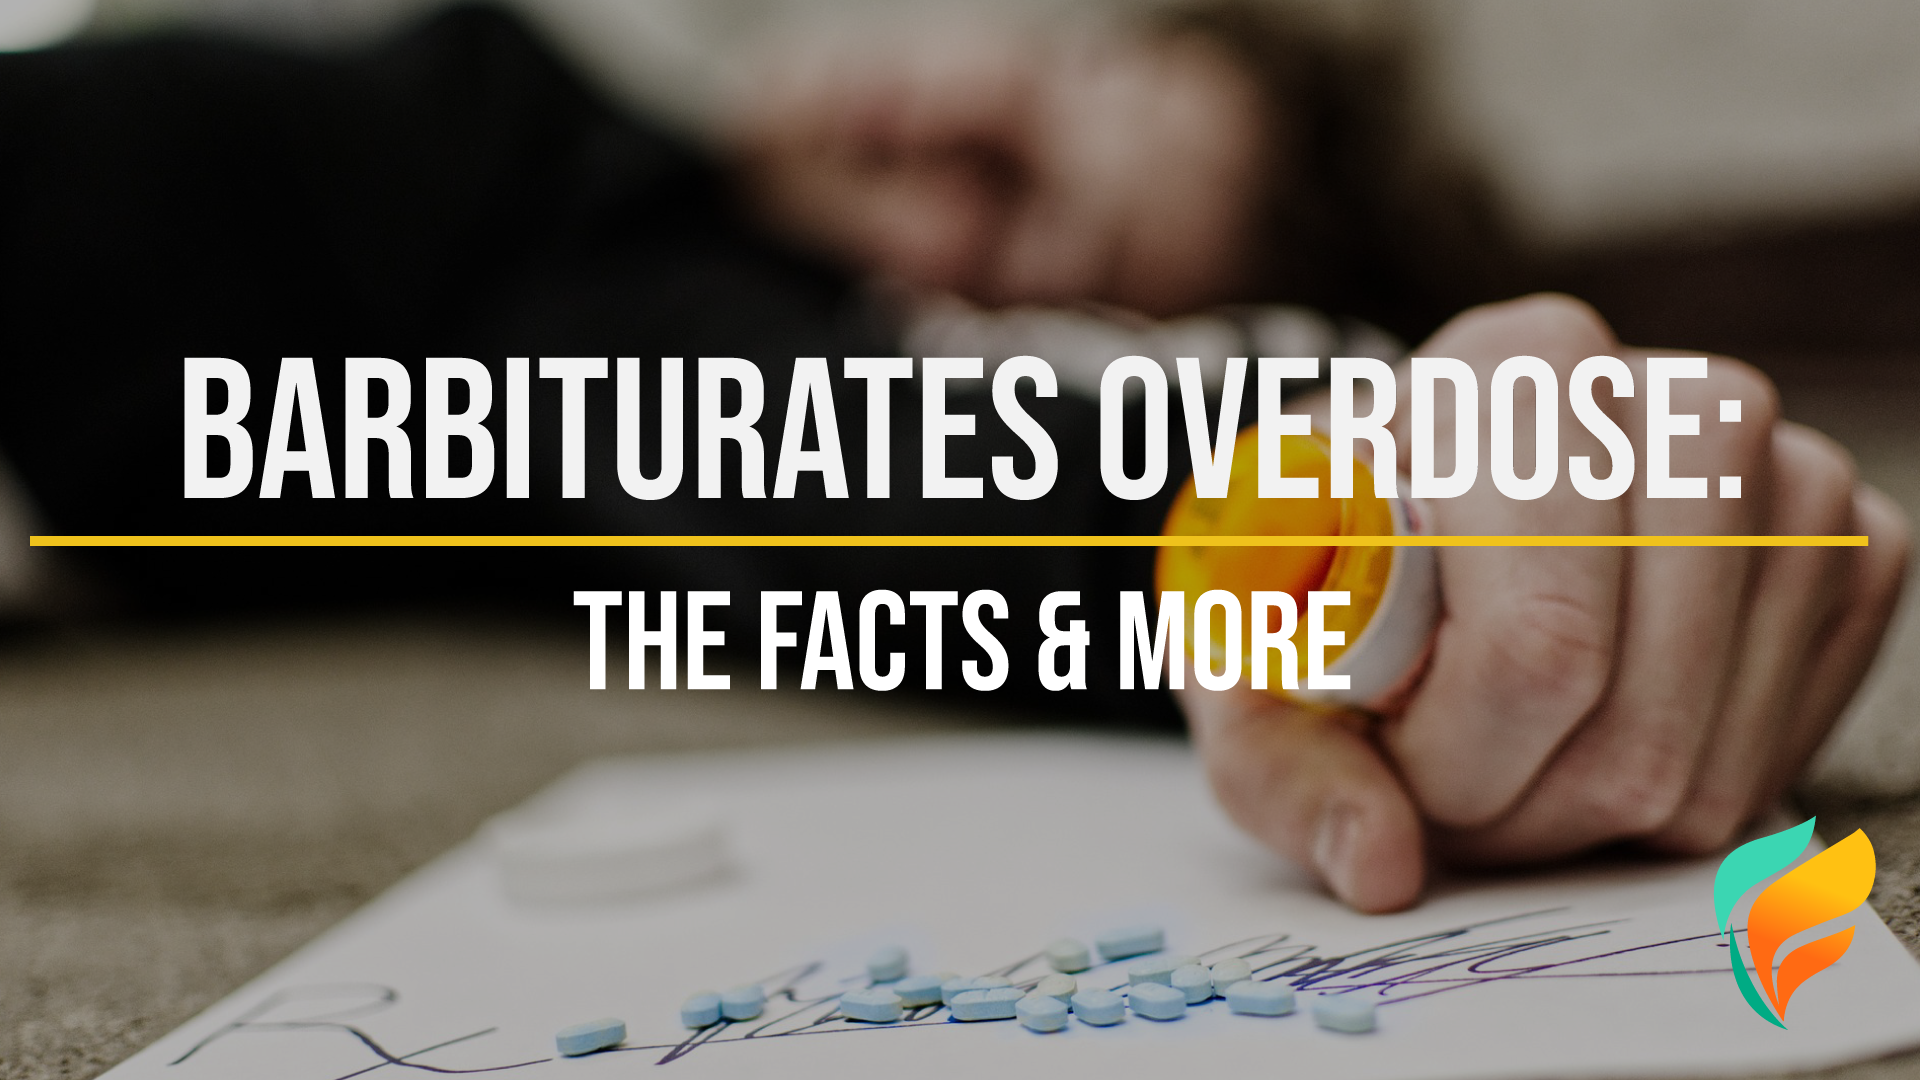 Barbiturates overdose: The Facts